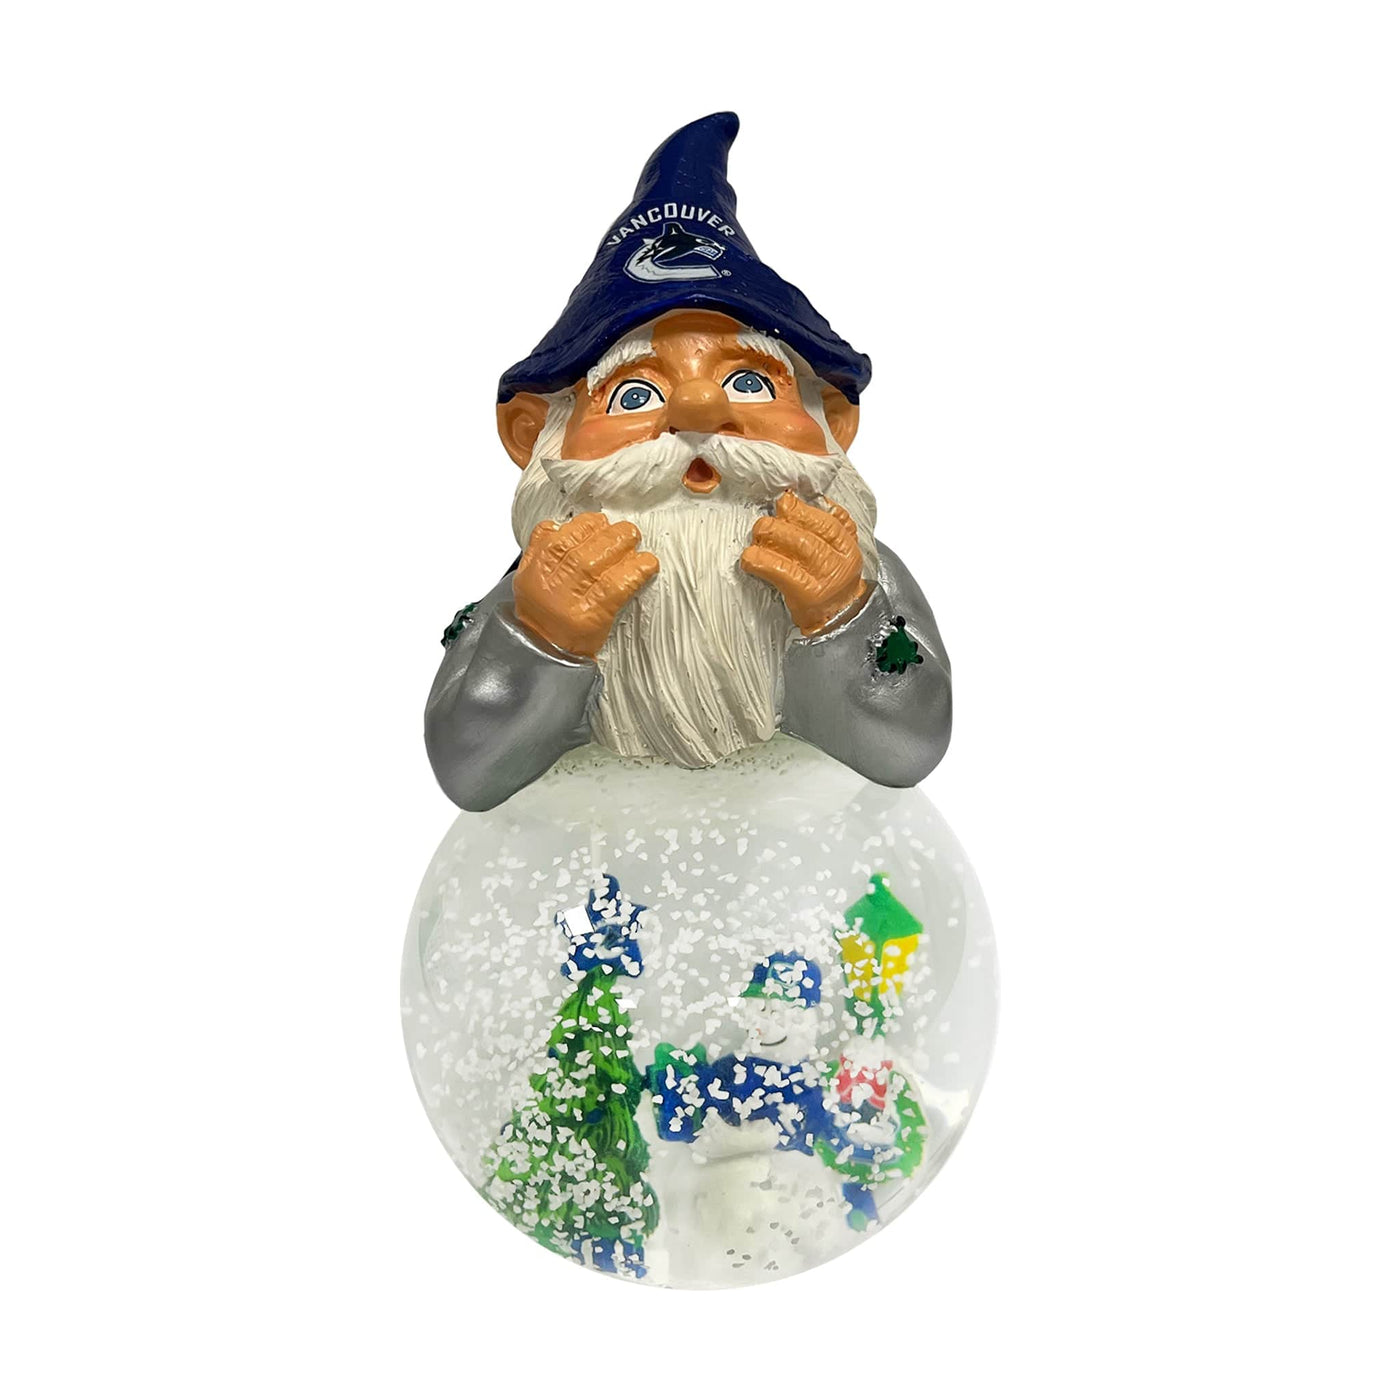 snow globe, snowglobe, elf, gnome, Canucks, Christmas, Holiday, Holidays, Festive, Snow, Decoration, decorations